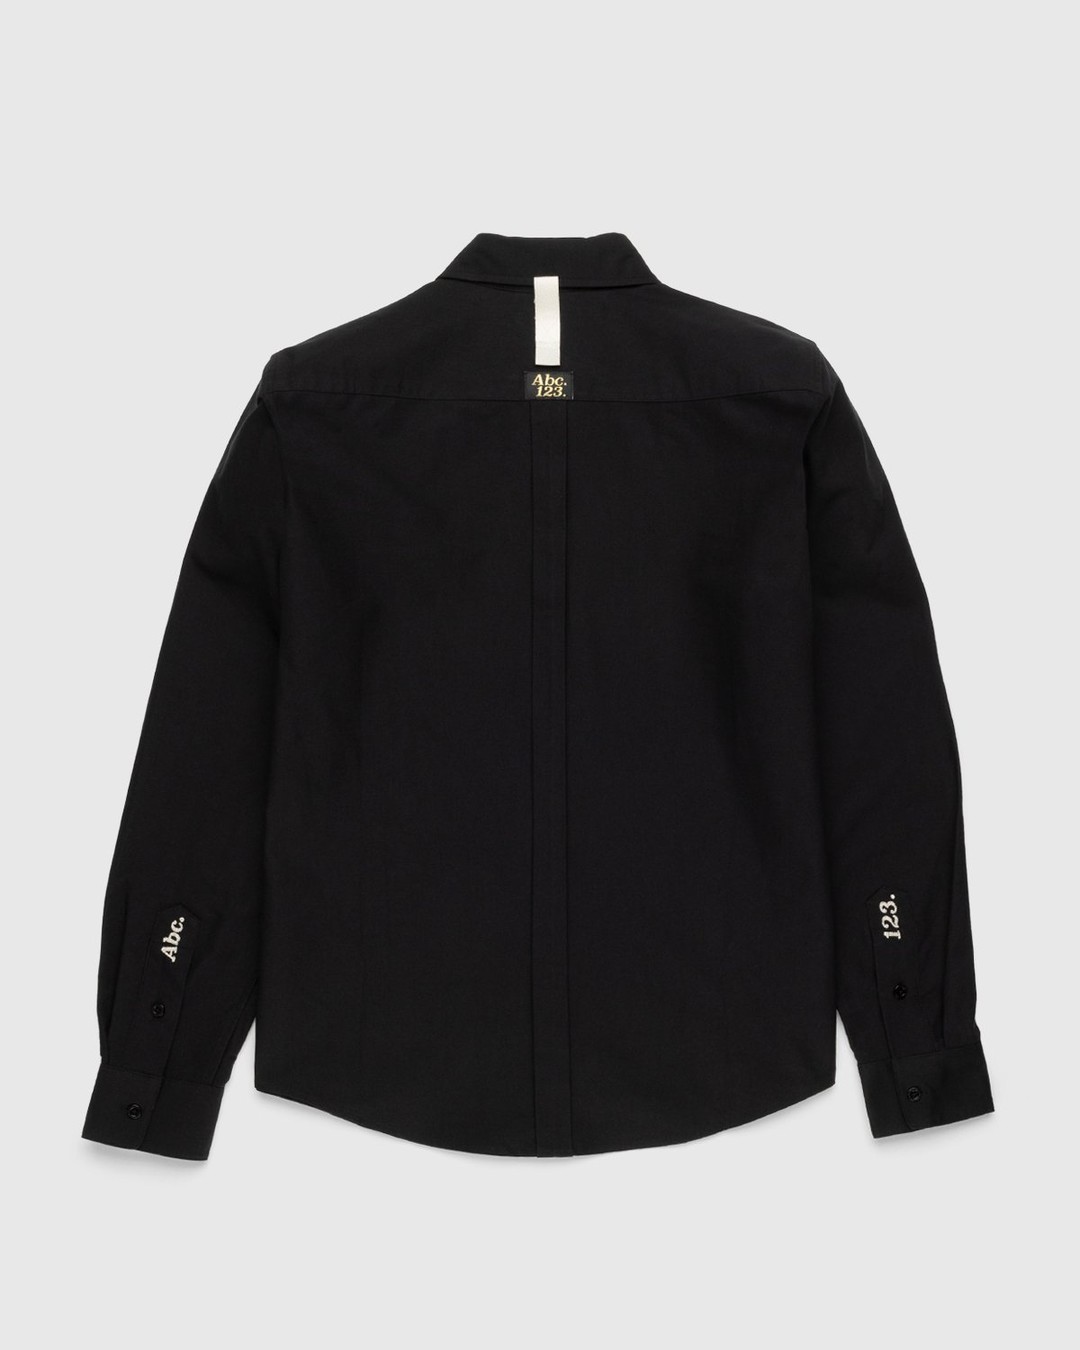 Abc. – Oxford Woven Shirt Anthracite - Longsleeve Shirts - Black - Image 2